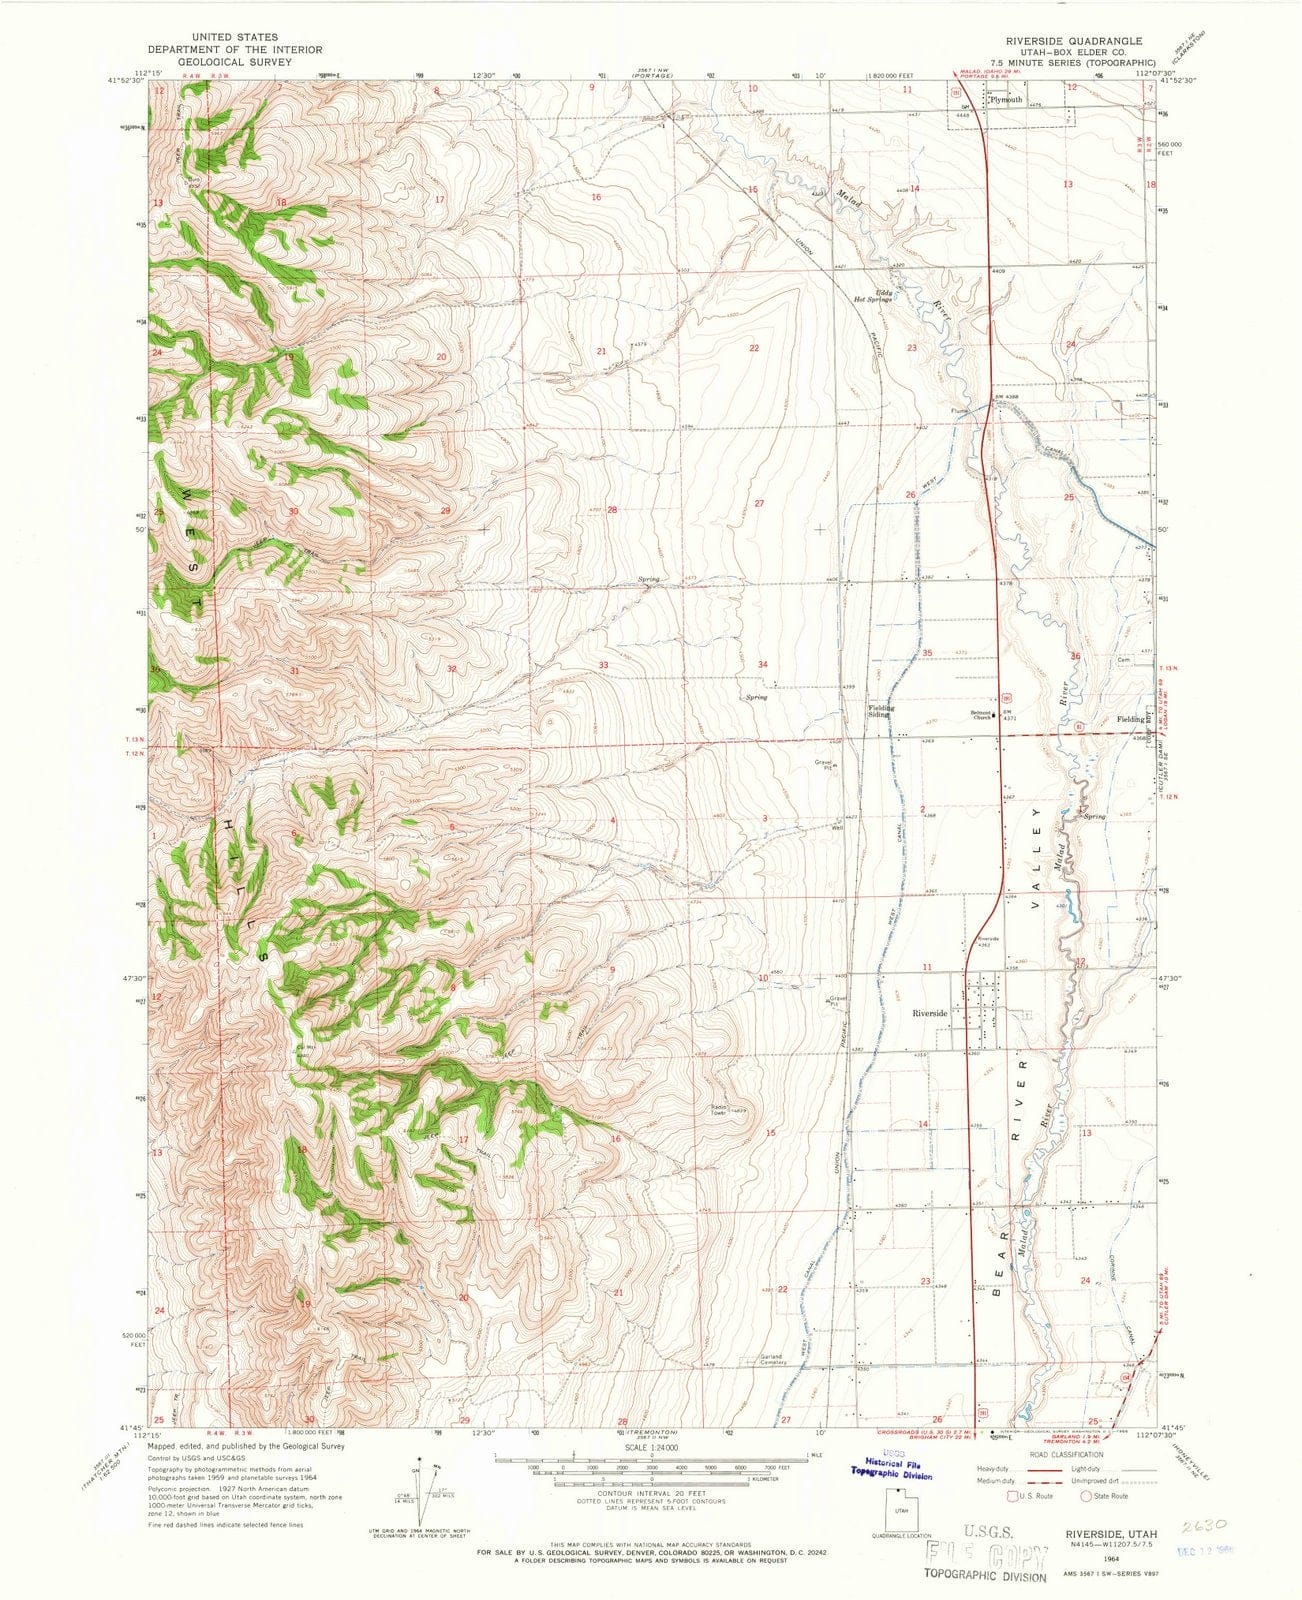 1964 Riverside, UT - Utah - USGS Topographic Map